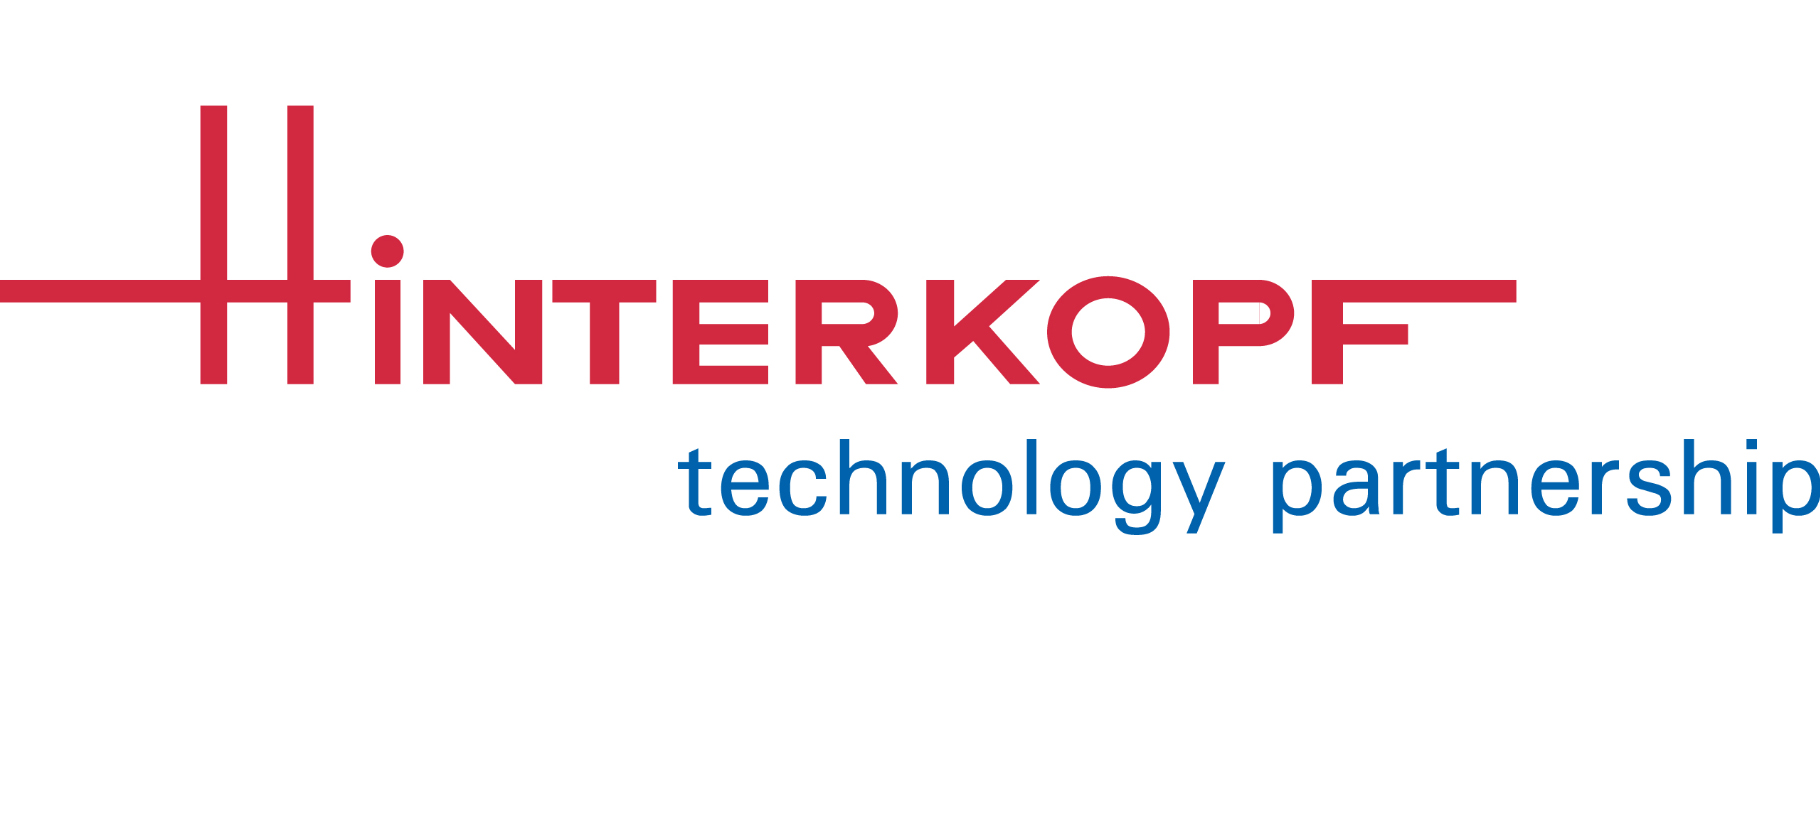 Hinterkopf GmbH